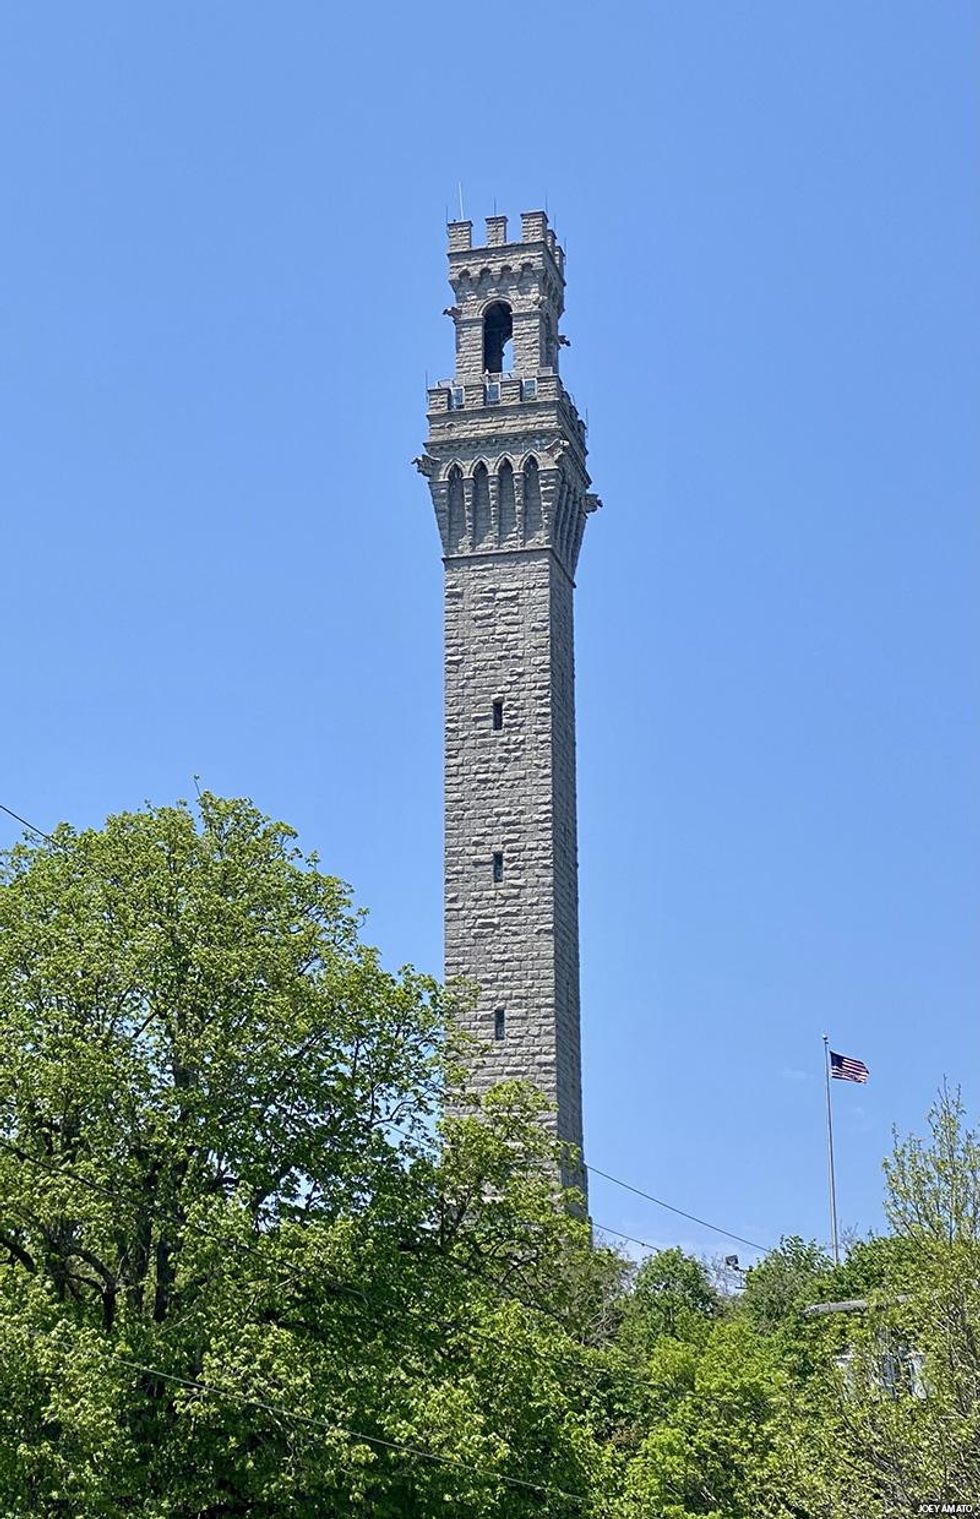 The Pilgrim Monument in Provincetown